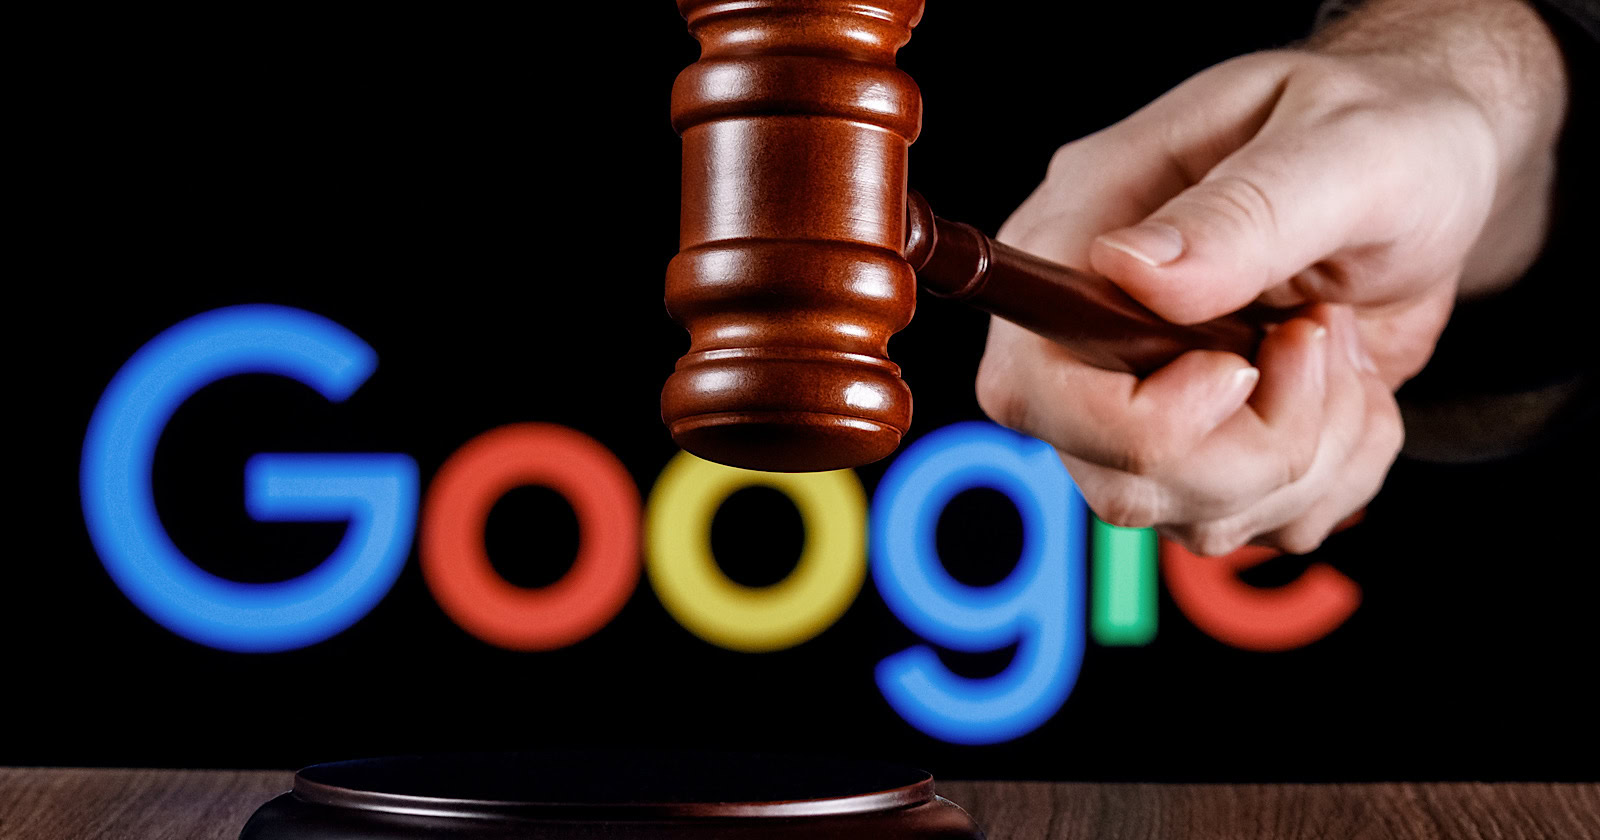 Gavel in hand against the background of Google logo.